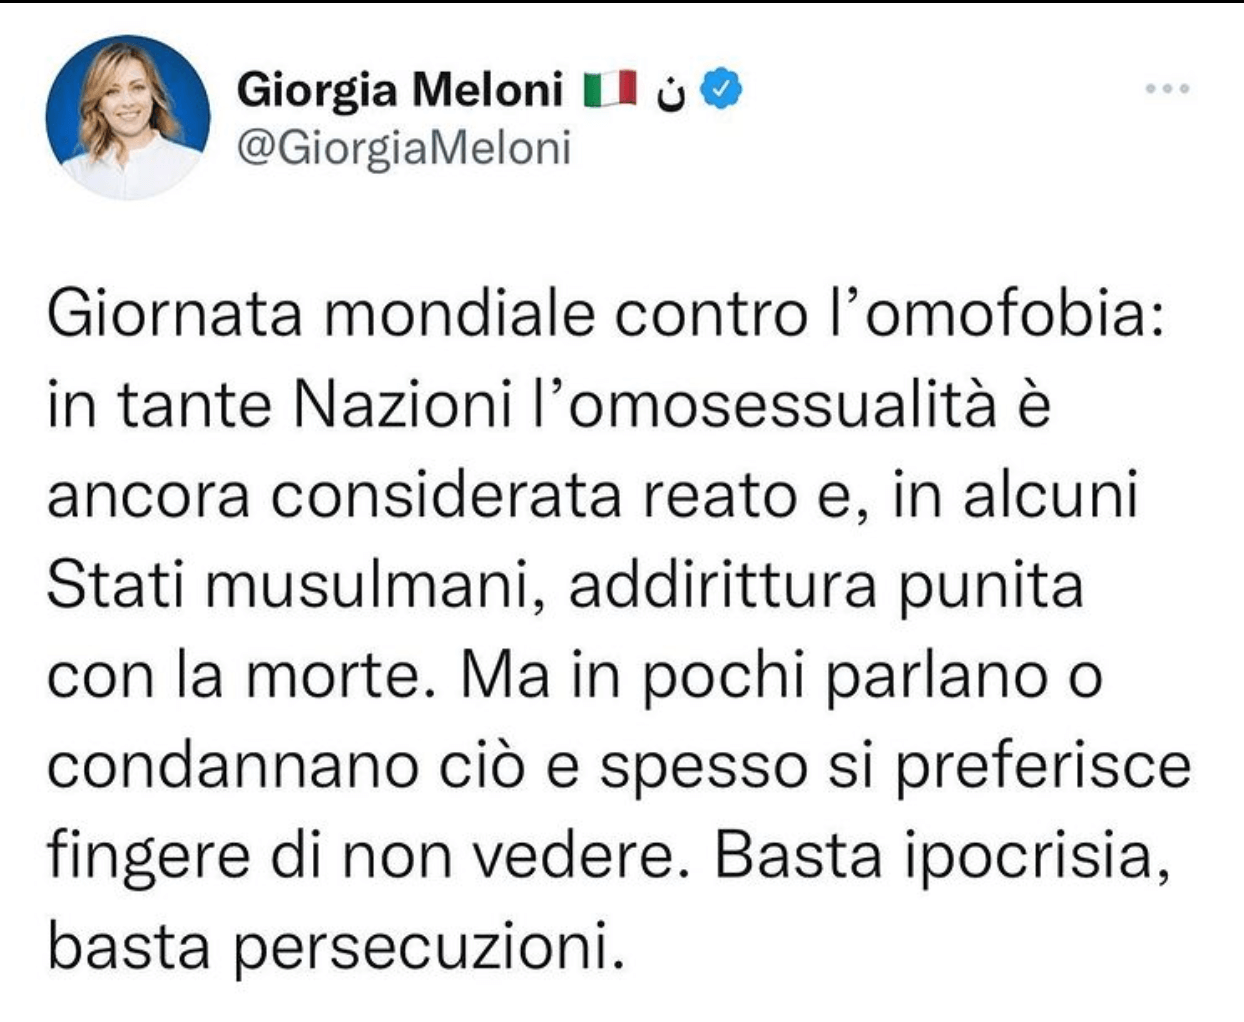 L'OmoBiTransFobia nel Multiverso Giorgia Meloni: "Basta persecuzioni, basta ipocrisia" - Giorgia Meloni - Gay.it